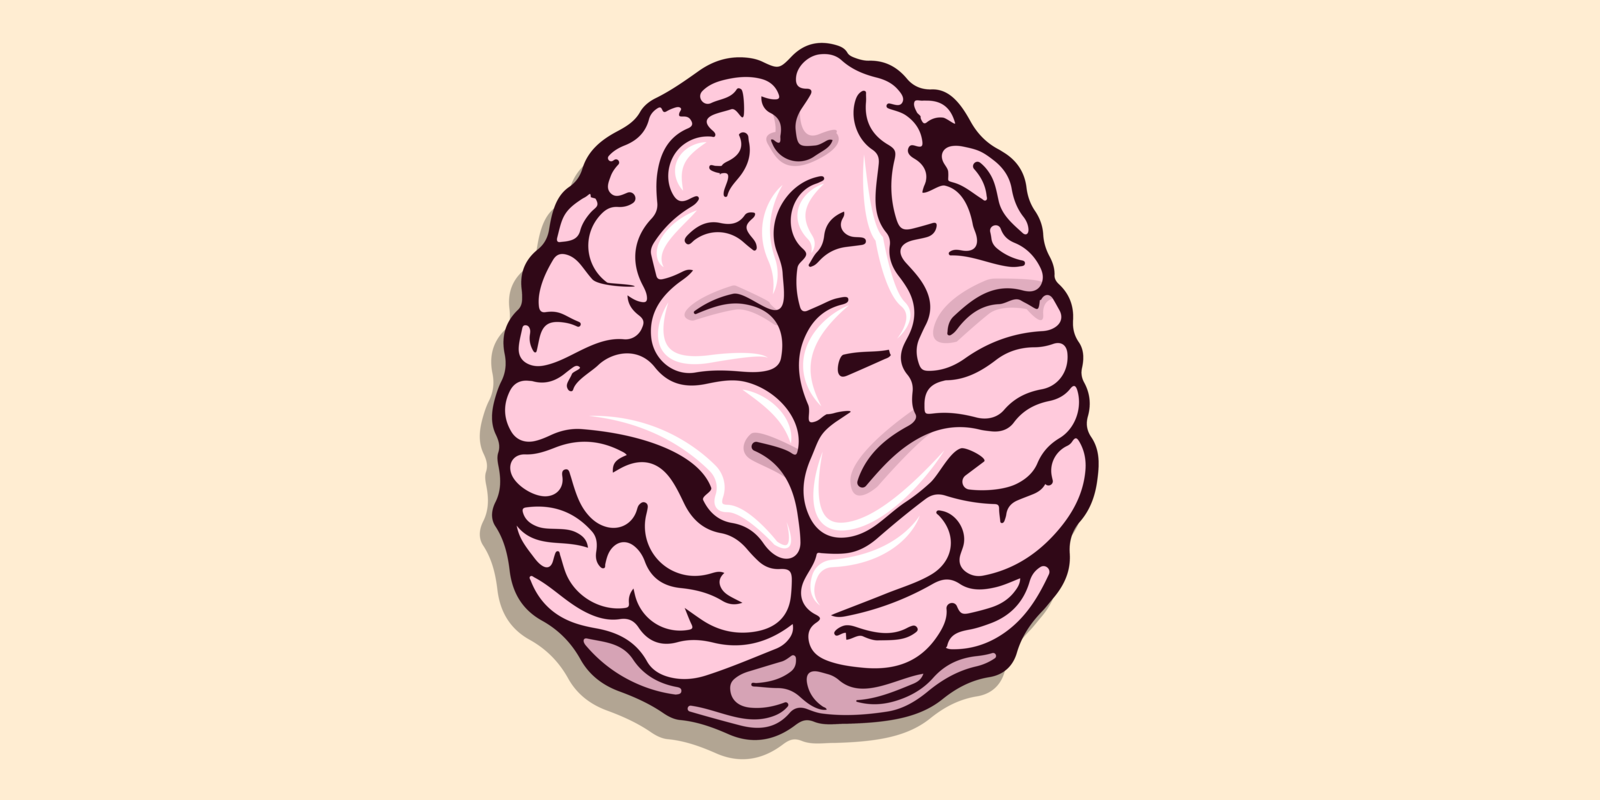 Brain Injury Awareness Month: ‘Change Your Mind’ about traumatic brain injuries